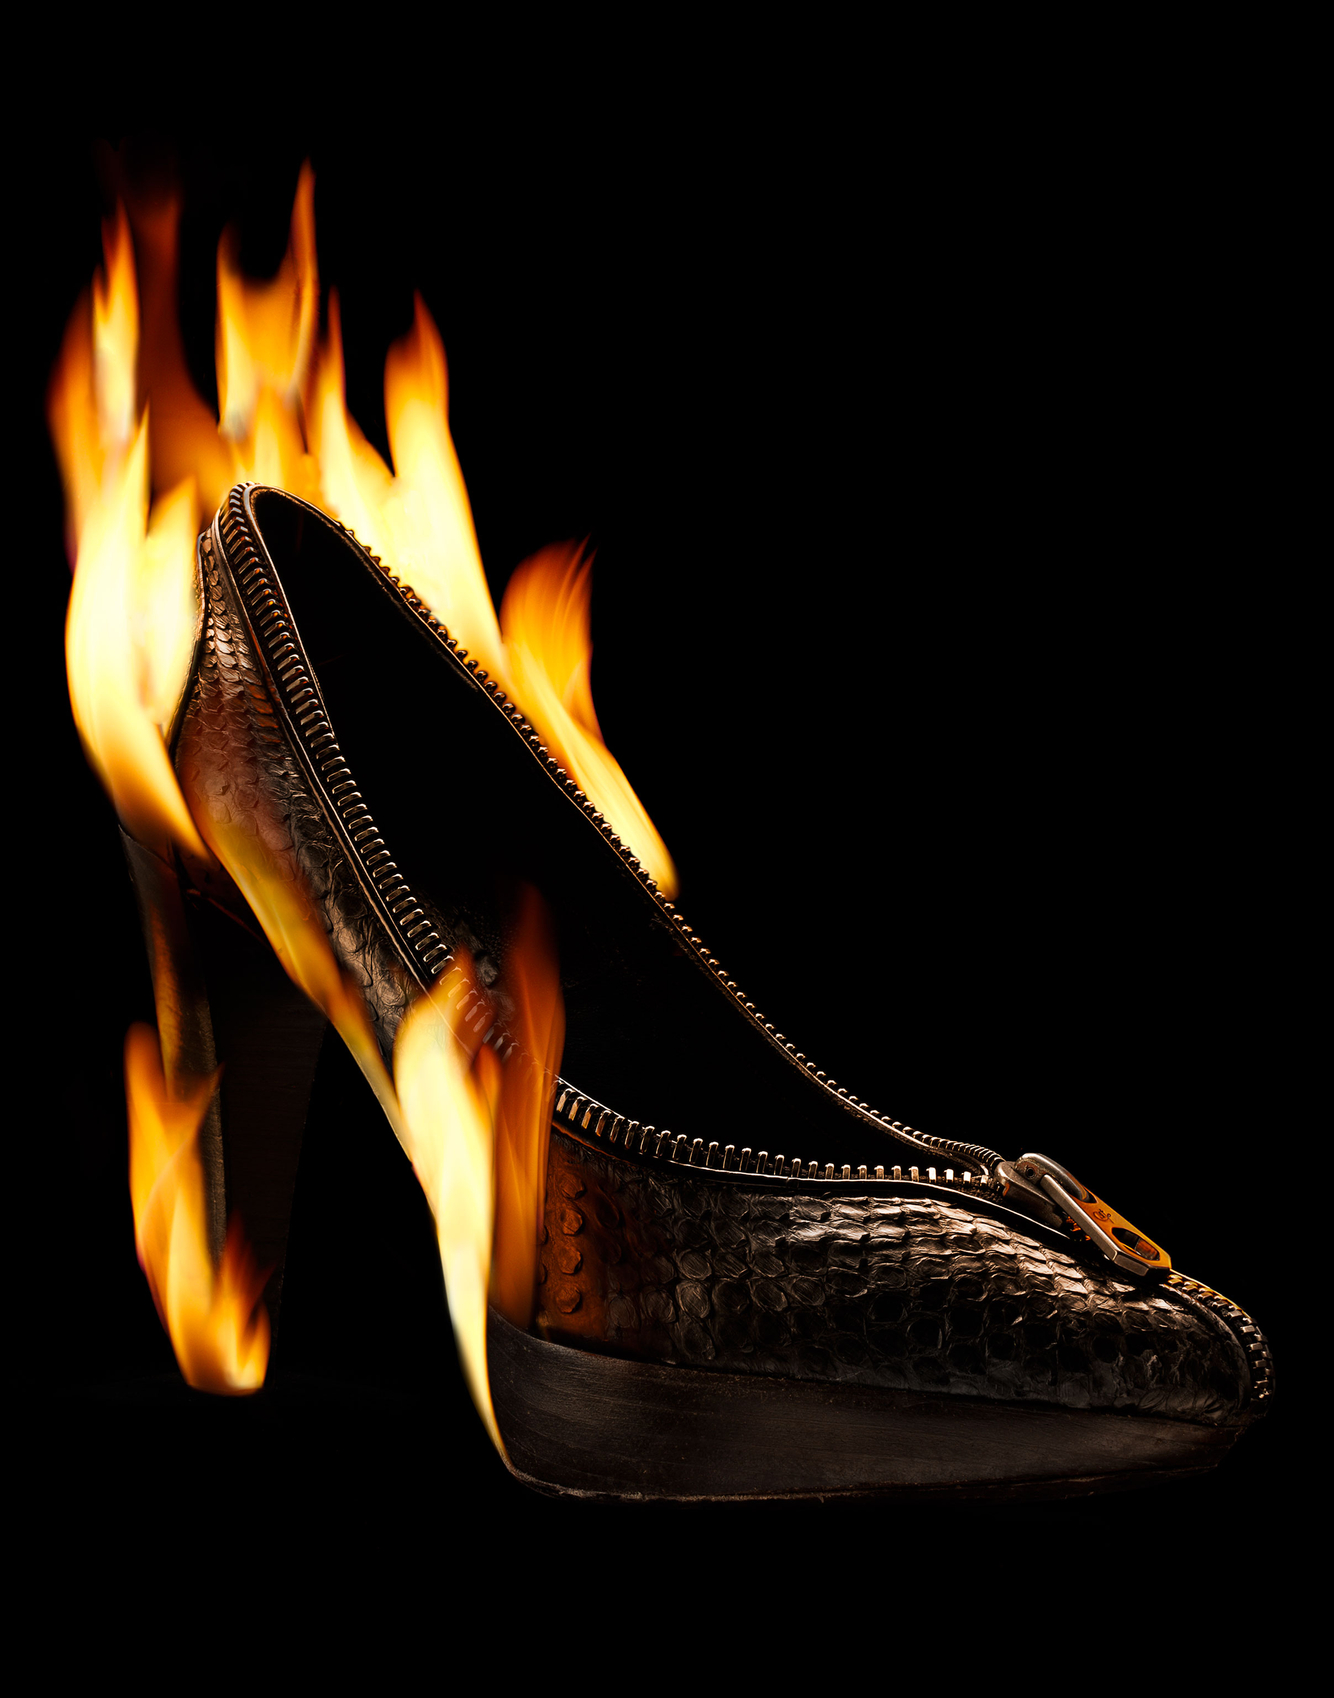 advertising footwear, pumps on fire